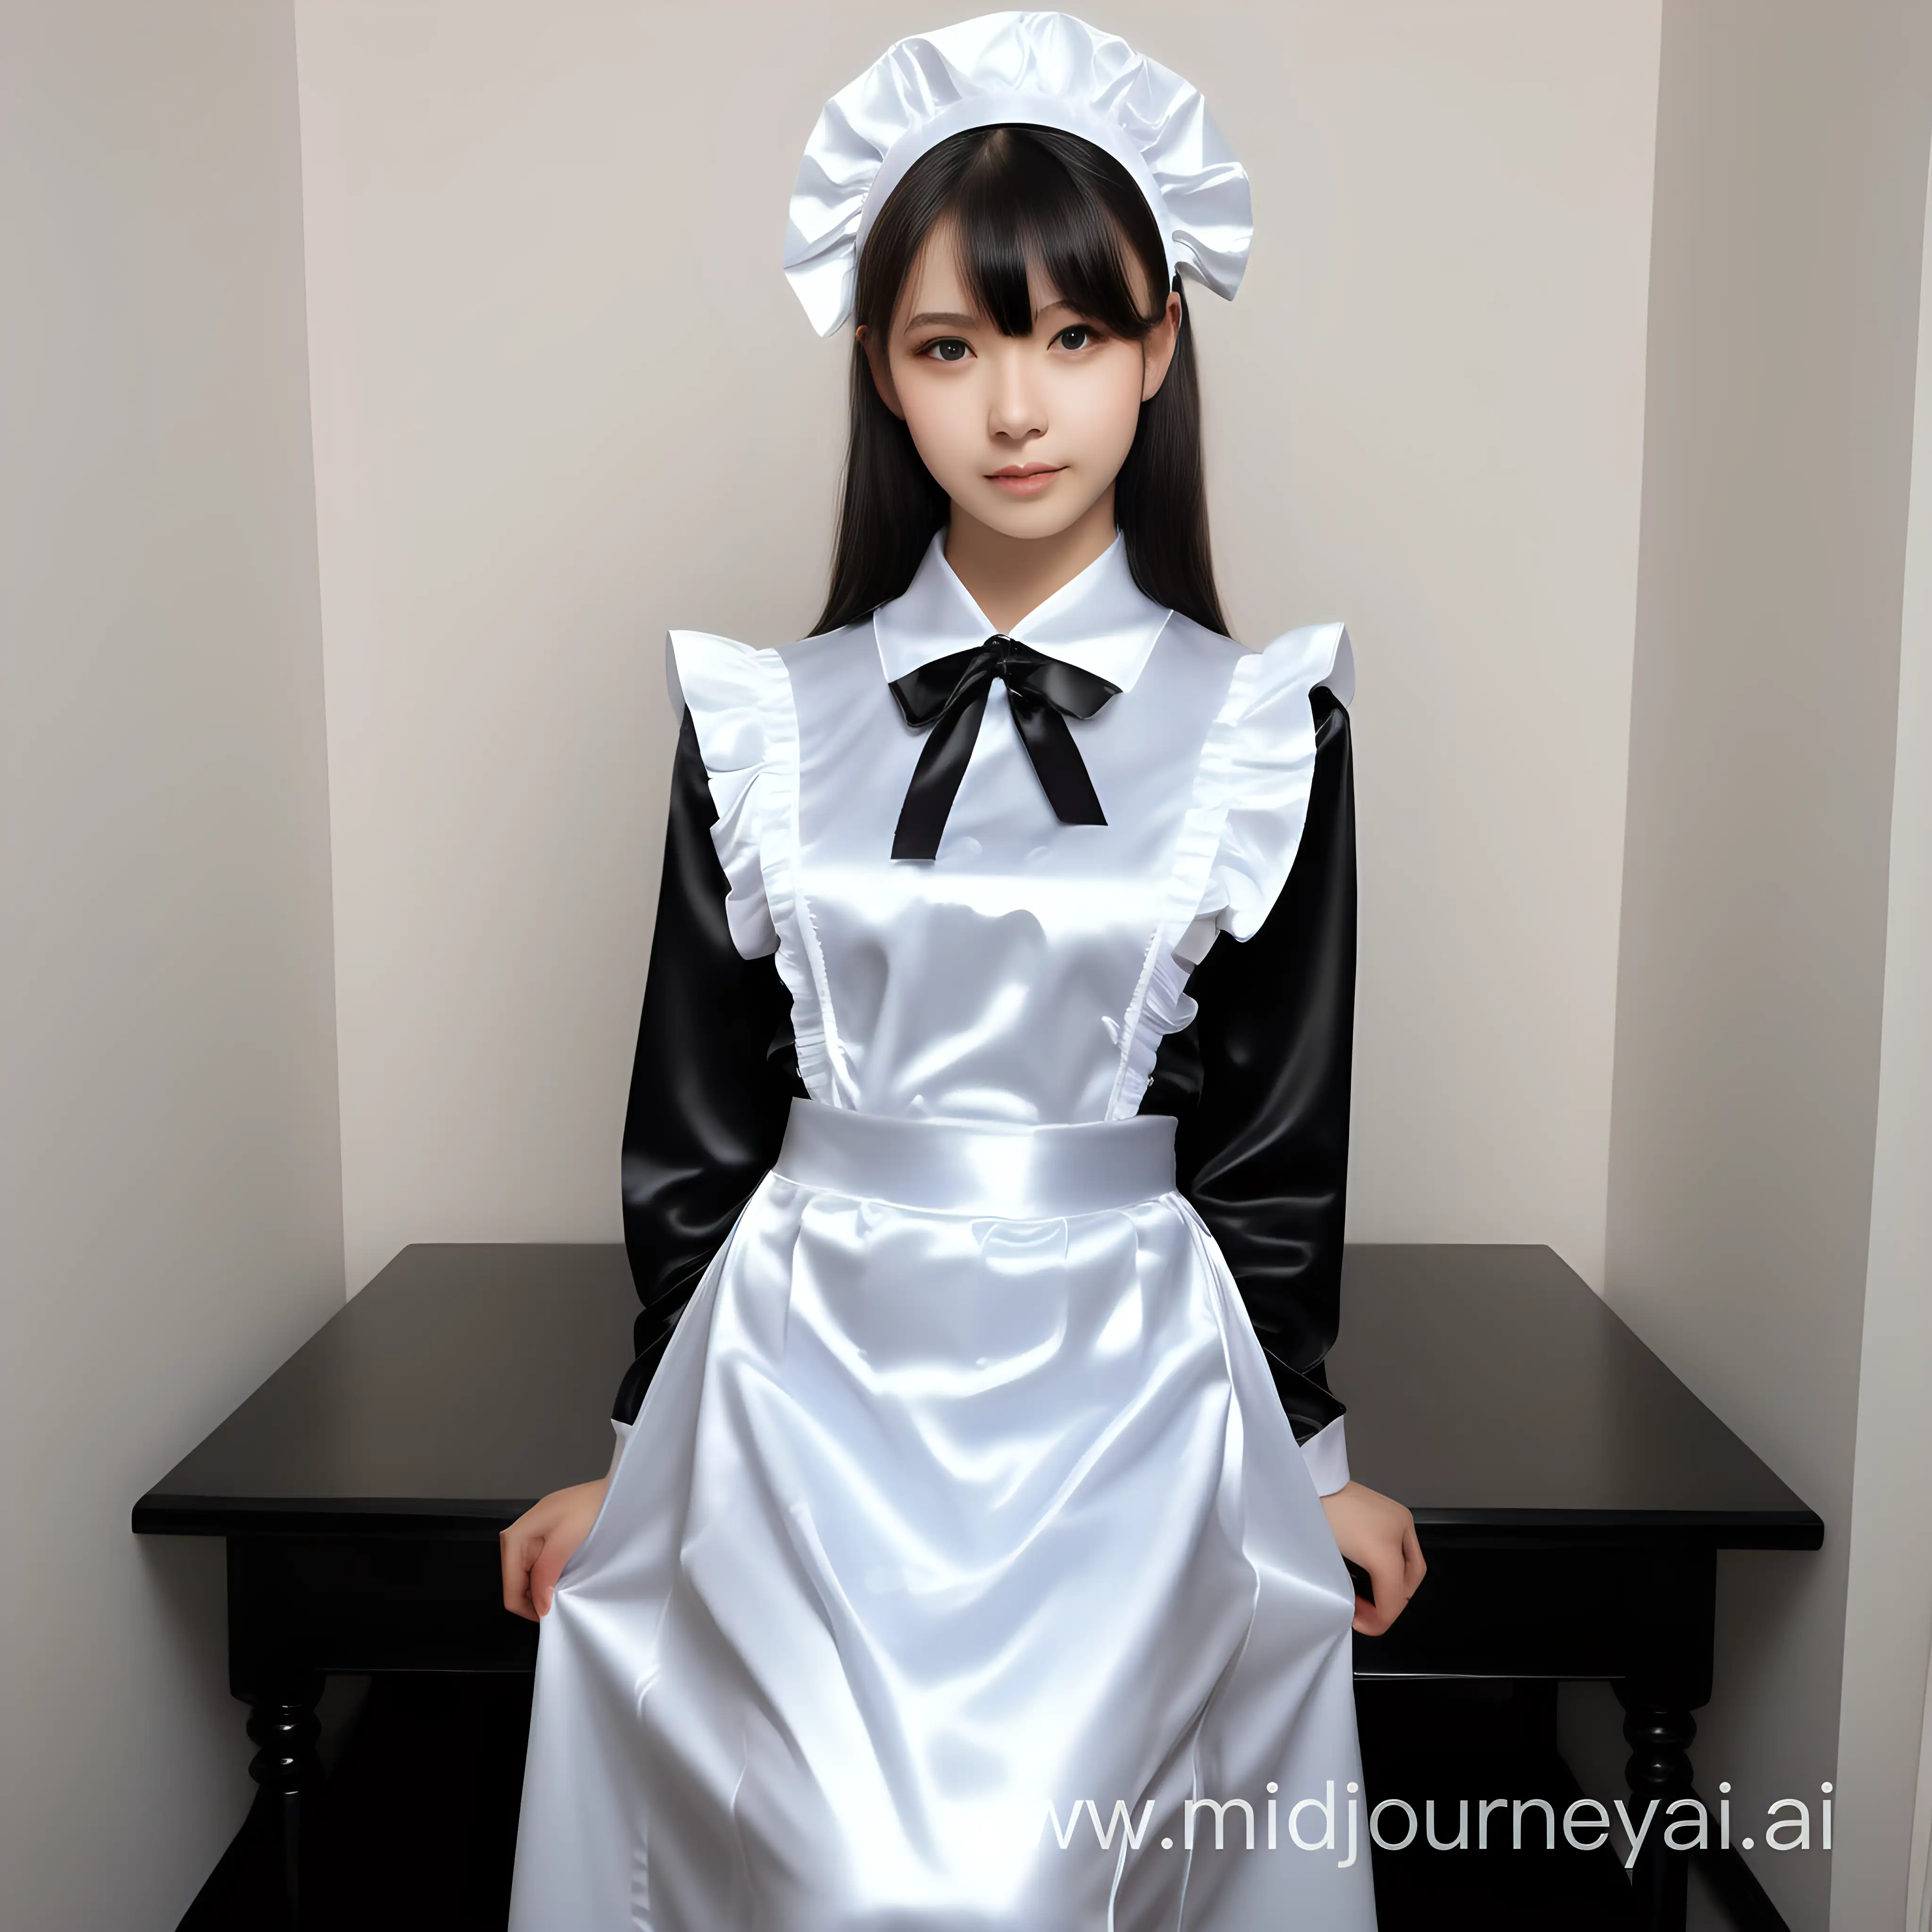 Graceful Maid in Elegant Satin Uniform Sophisticated Household Attire